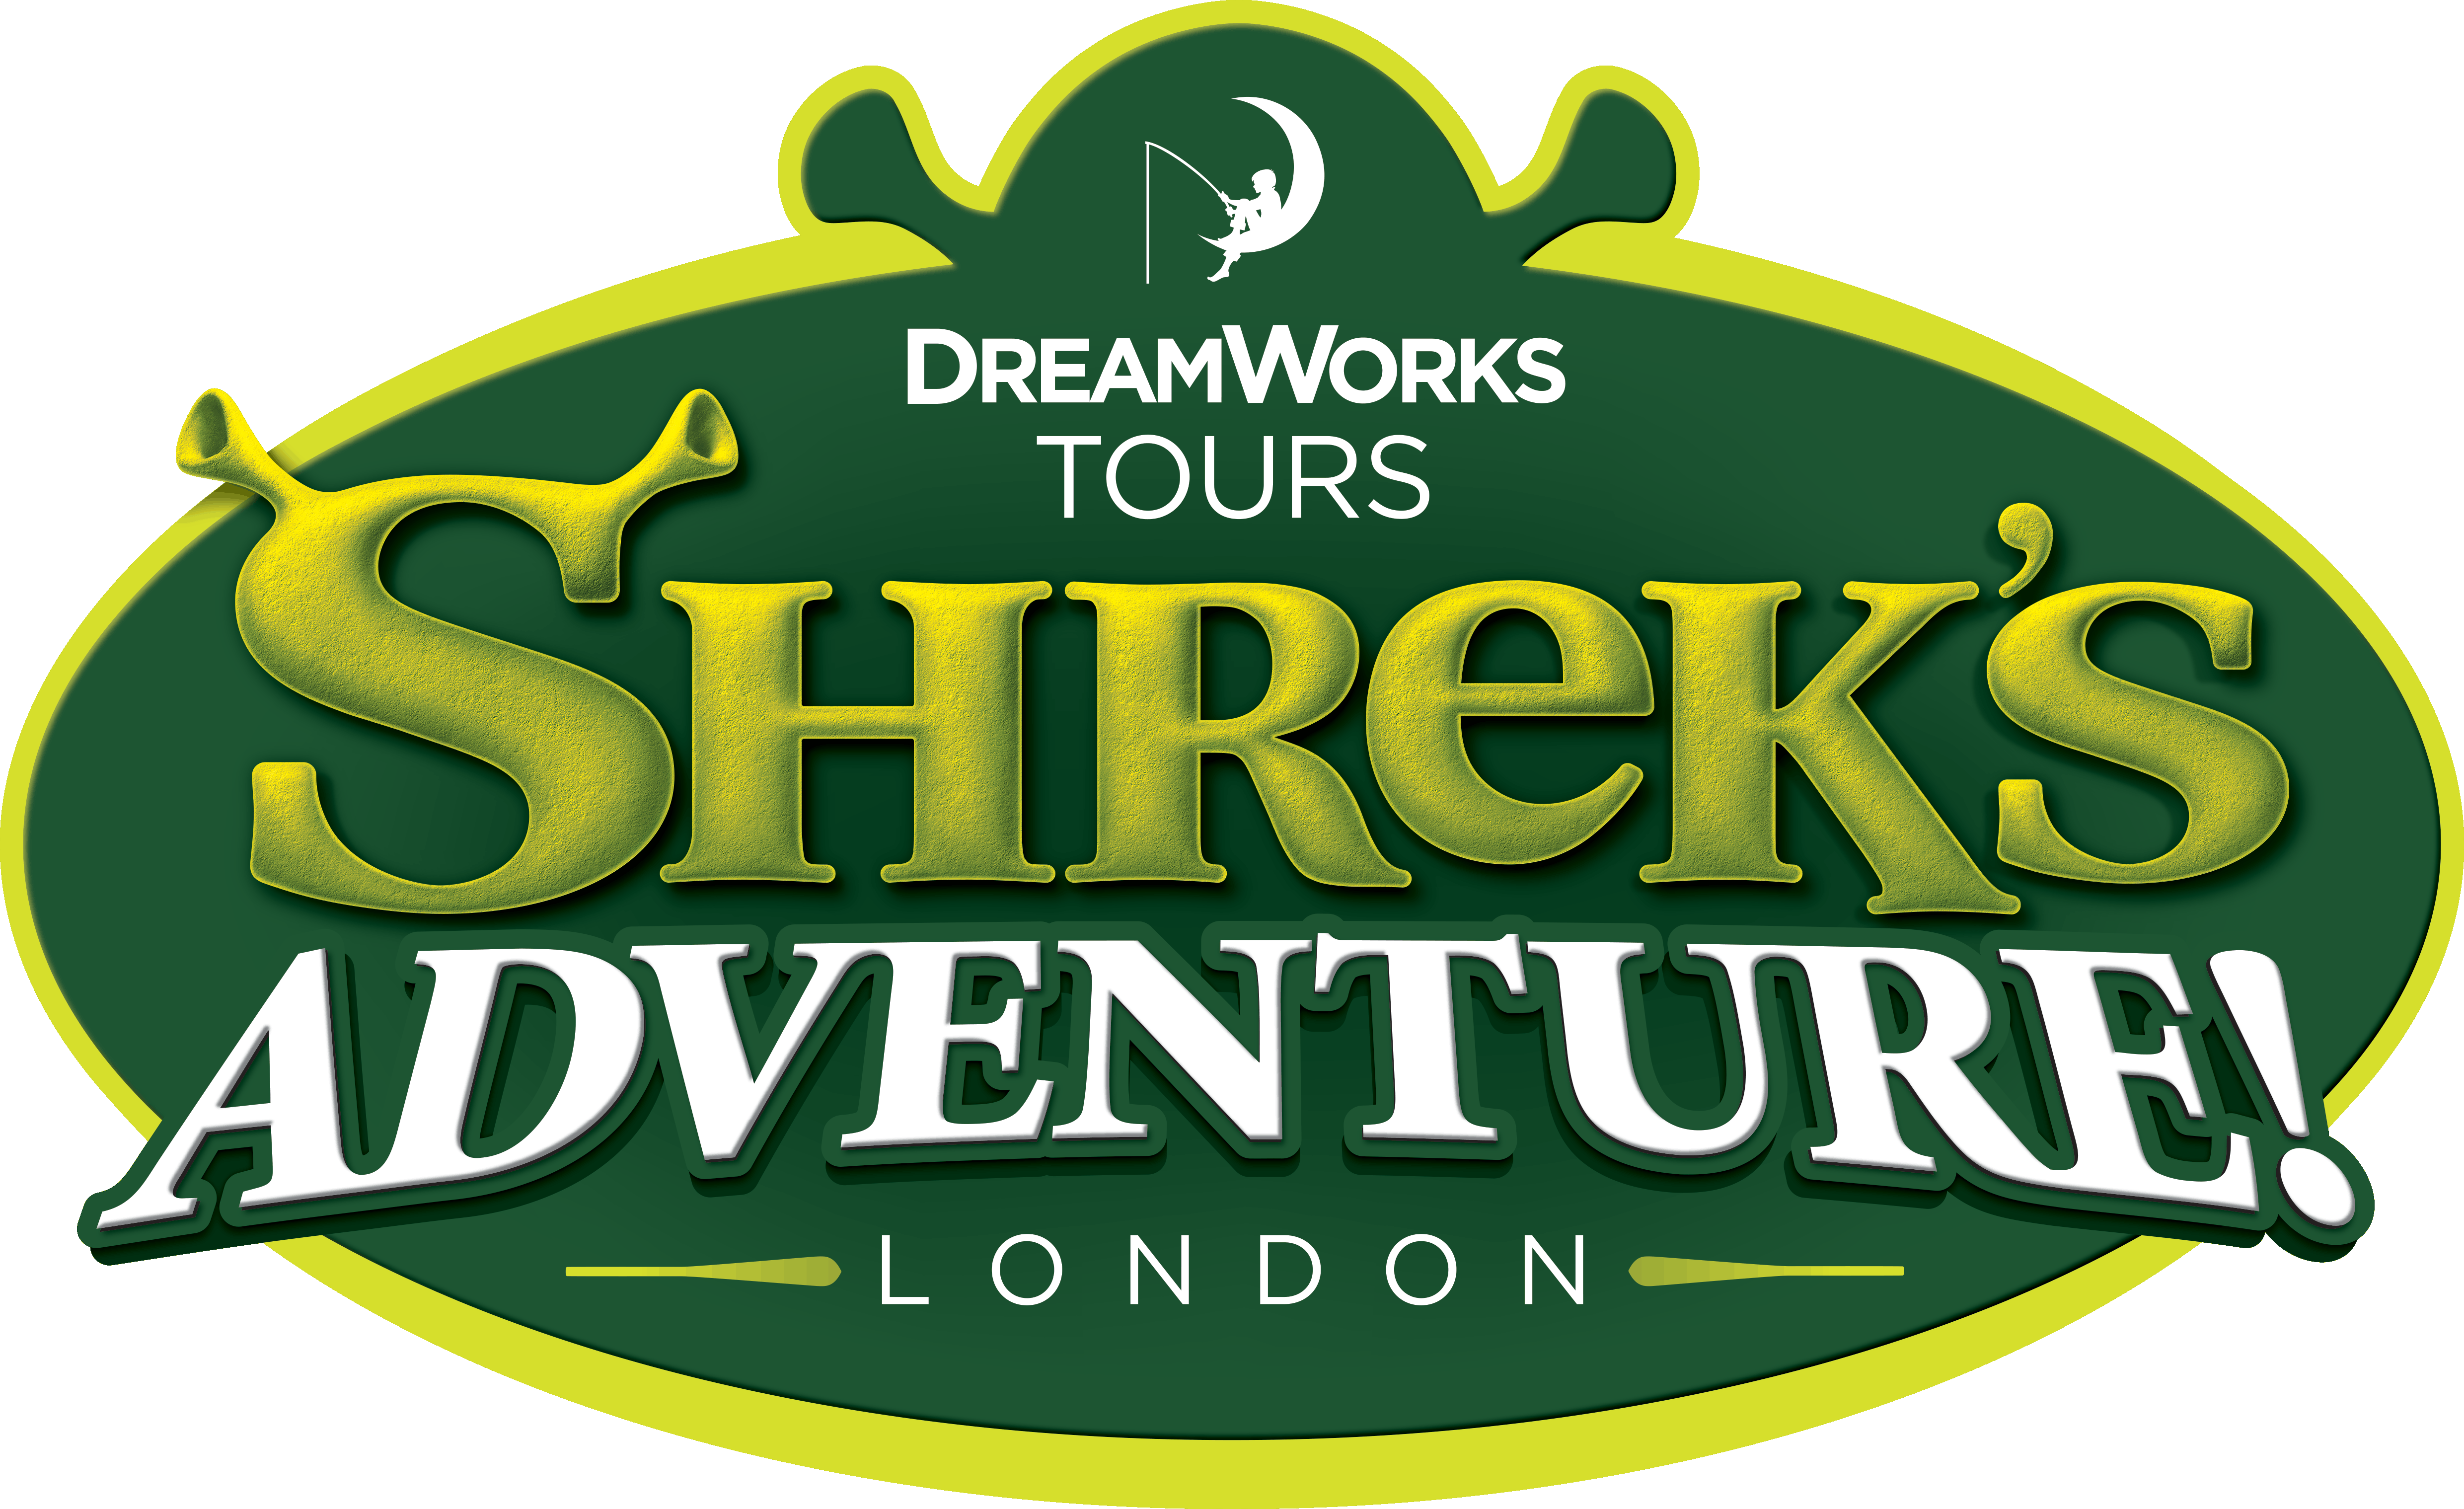 Shrek's Adventure!